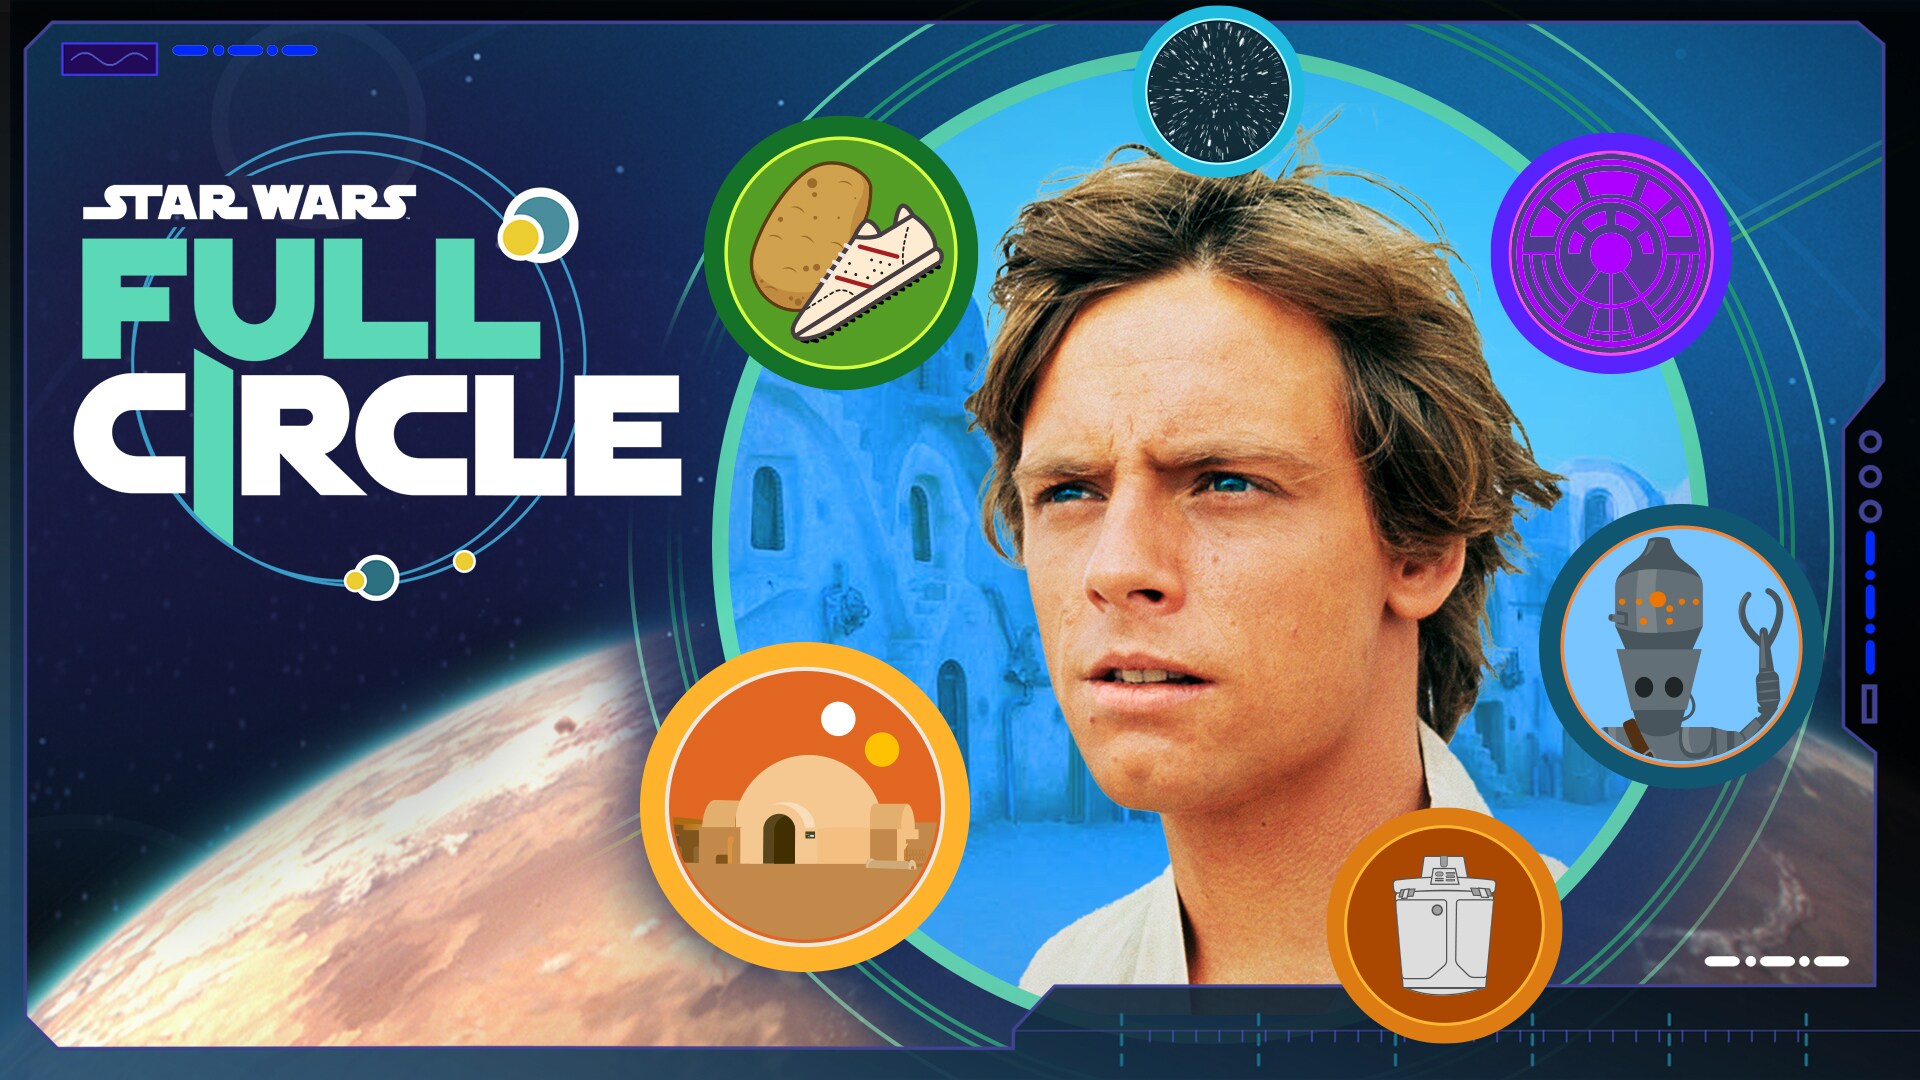 Tatooine | Star Wars Full Circle